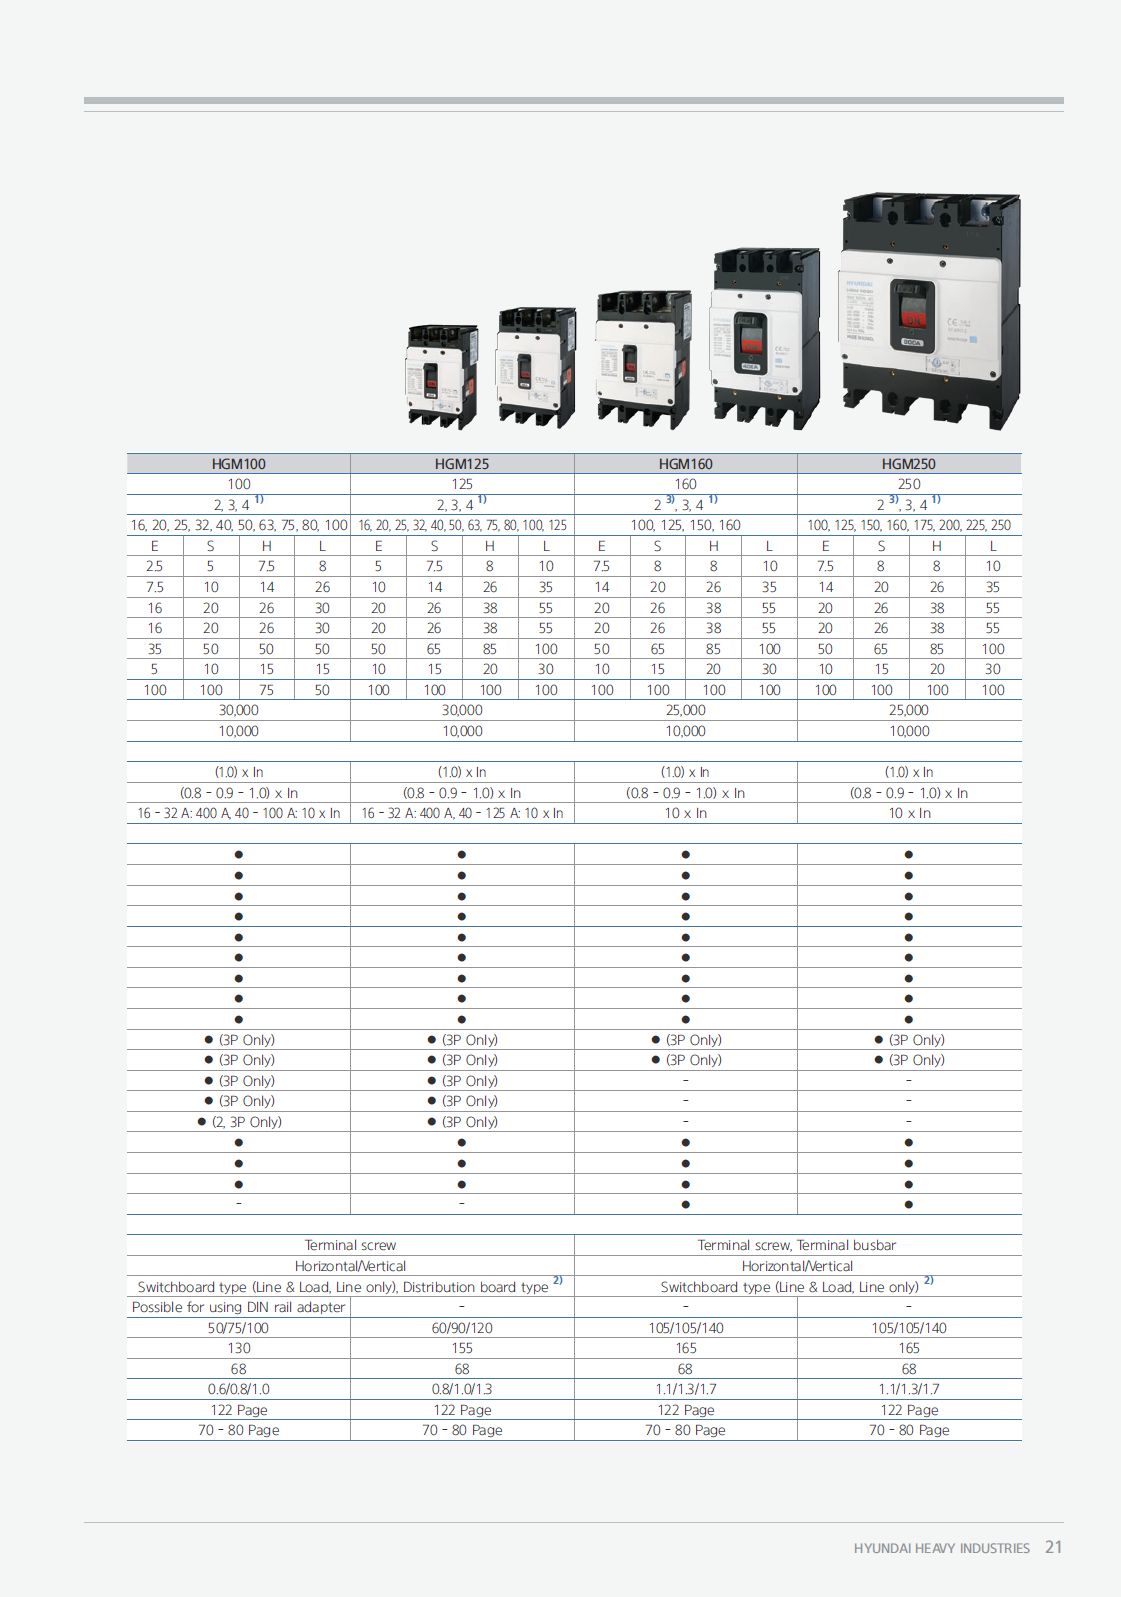 Hyundai Marine Circuit Breaker (MCCB) - HGM30S 3P Fixed / Plug-in Type